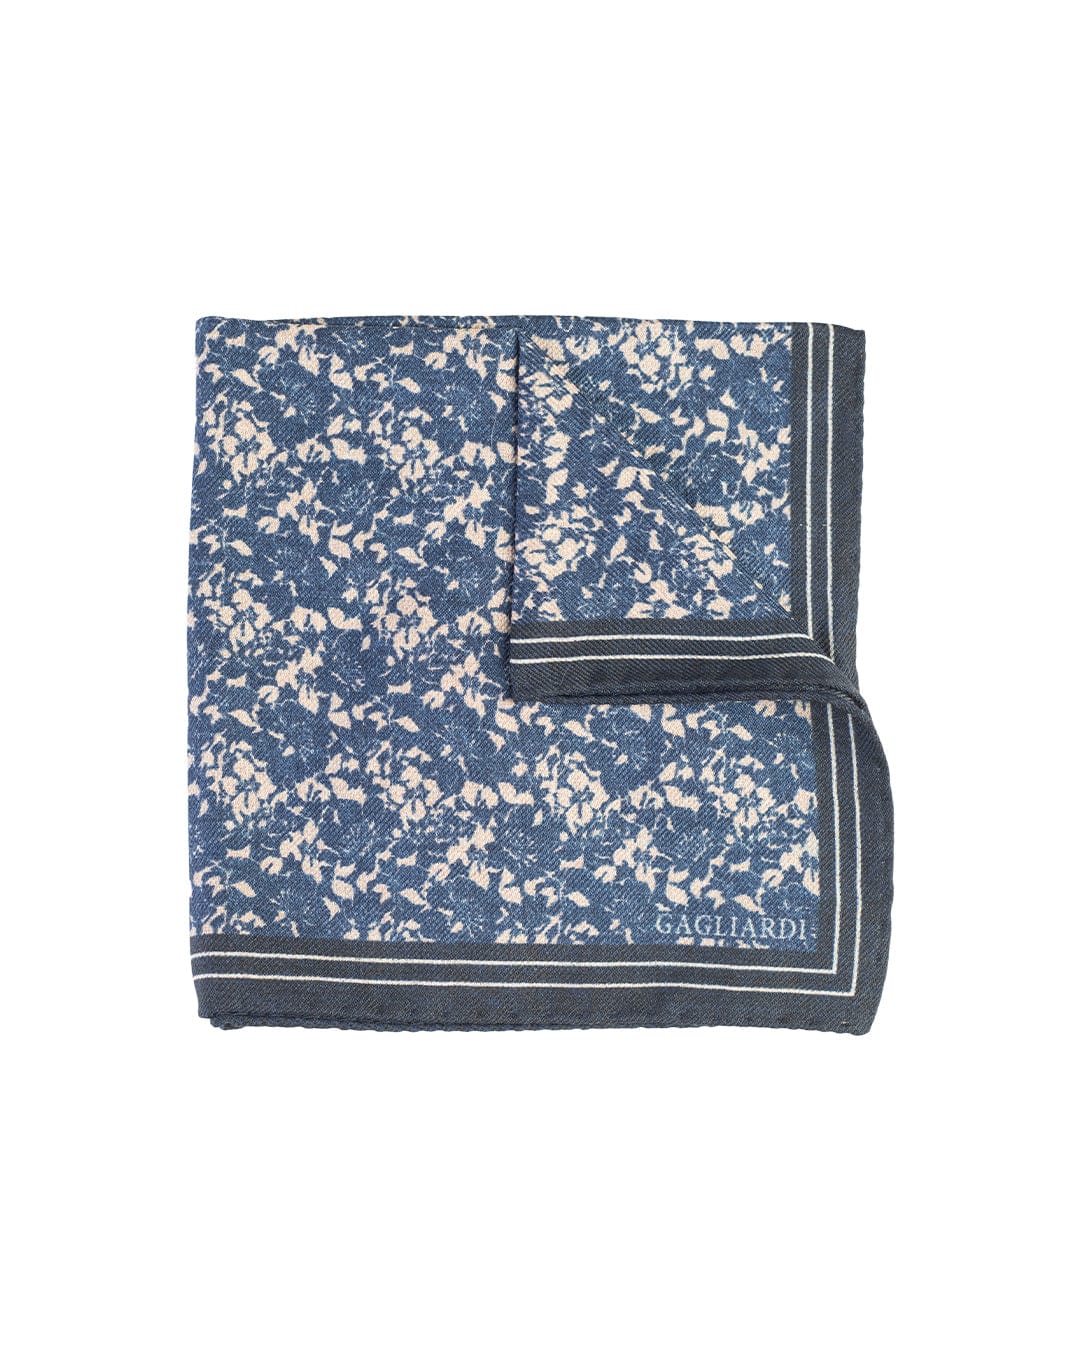 Gagliardi Pocket Squares ONE SIZE Gagliardi Blue Floral Italian Wool &amp; Silk Pocket Square